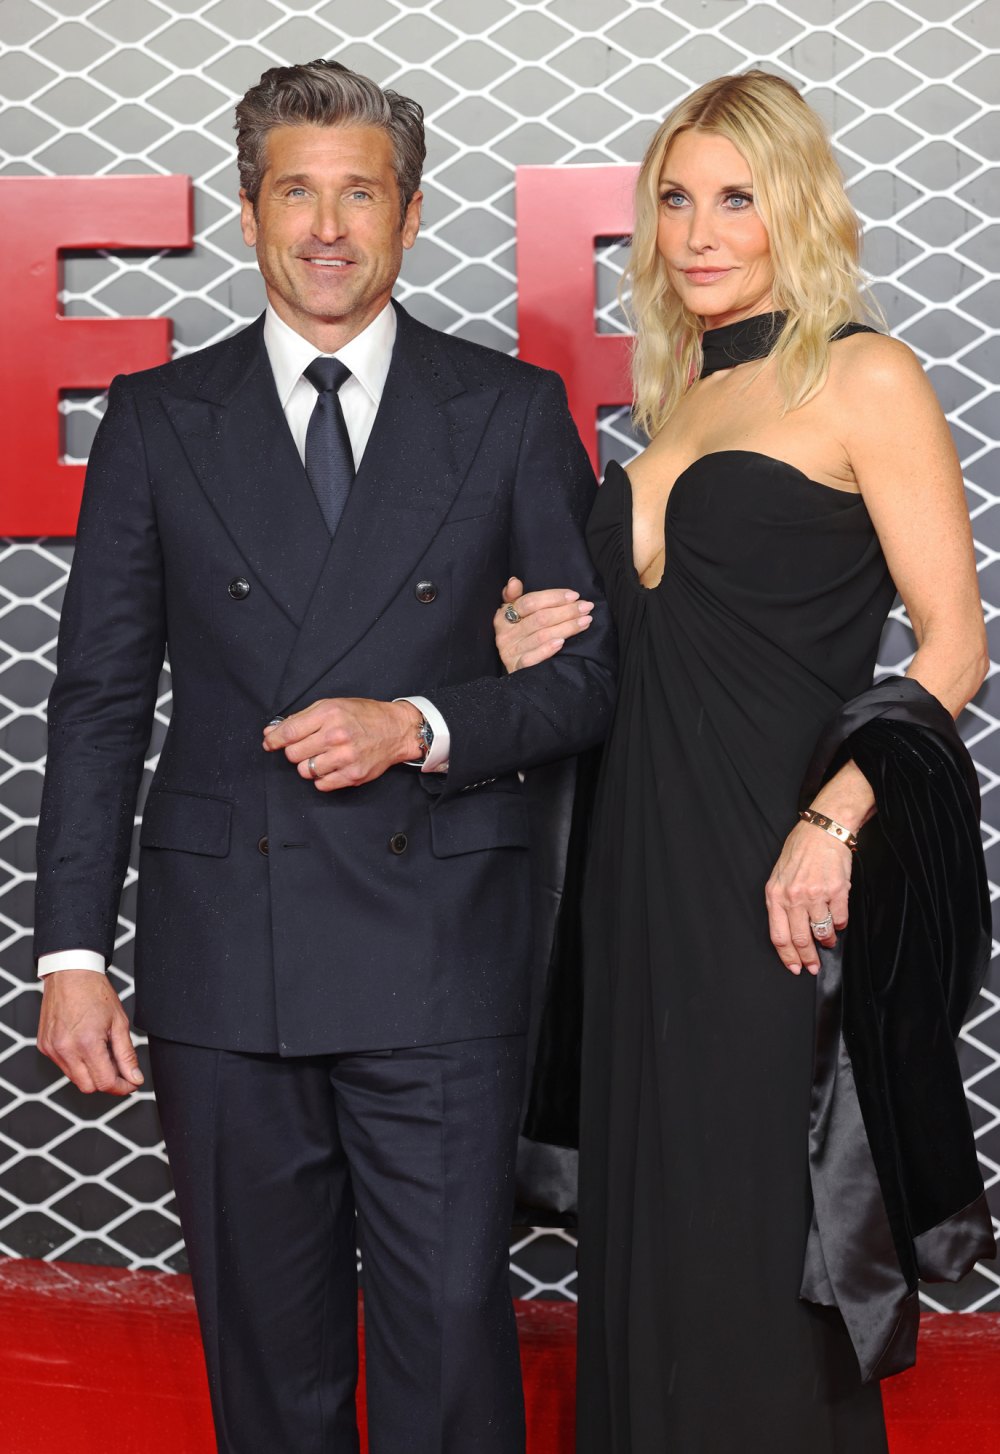 Patrick Dempsey and Wife Jillian Fink Make Stylish Joint Appearance at Ferrari Premiere in London